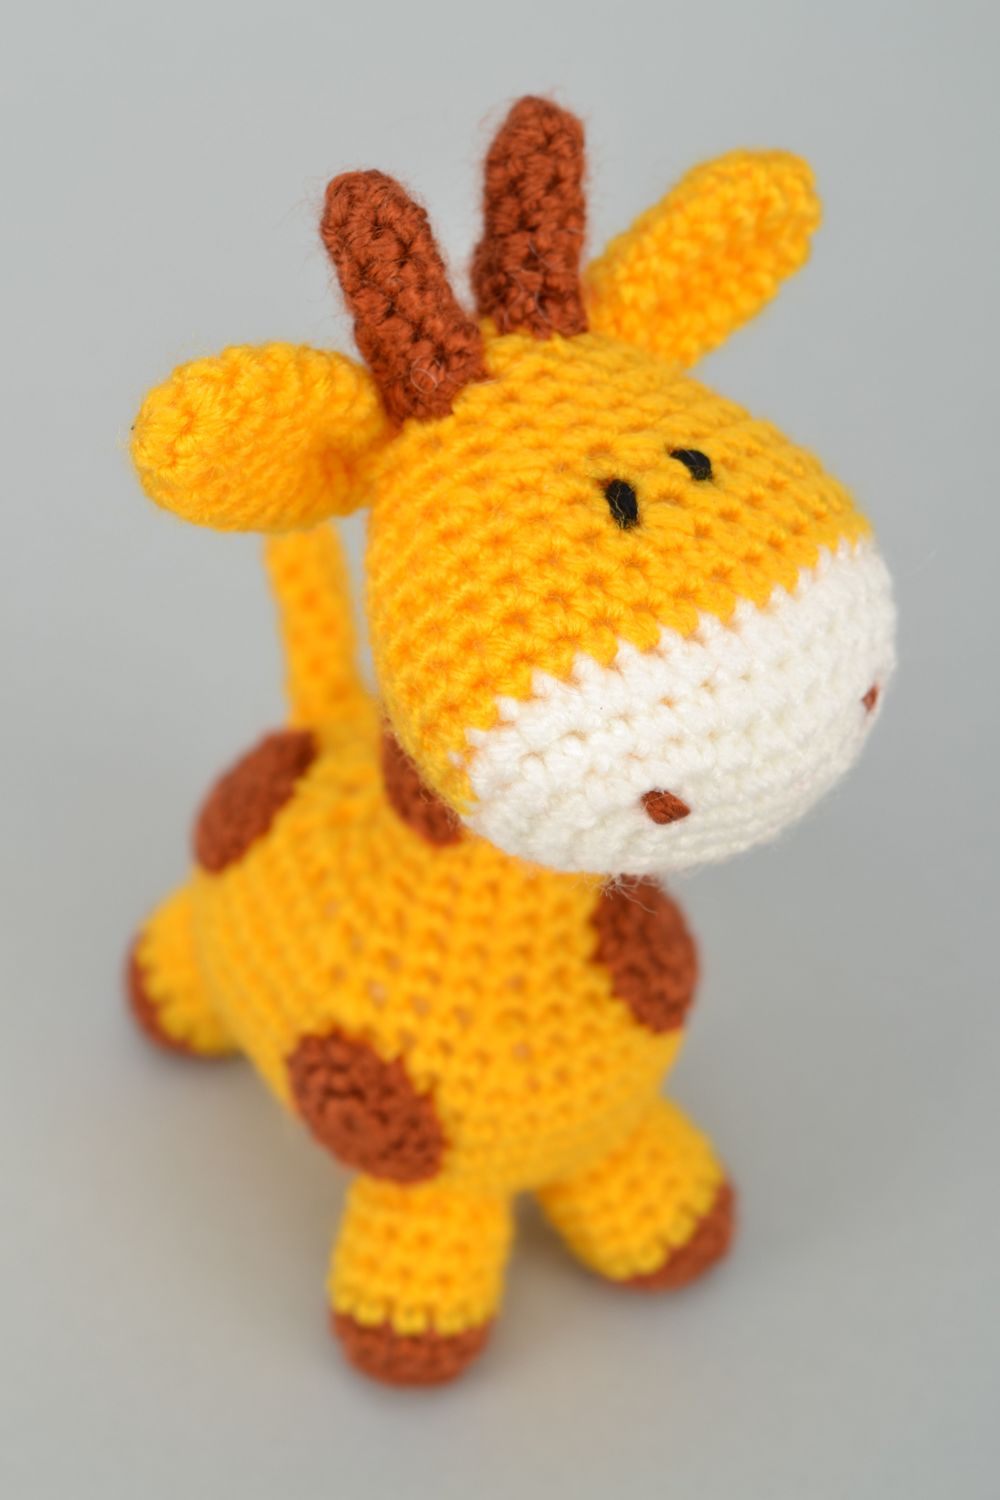 Jouet décoratif tricoté artisanal Girafe photo 3